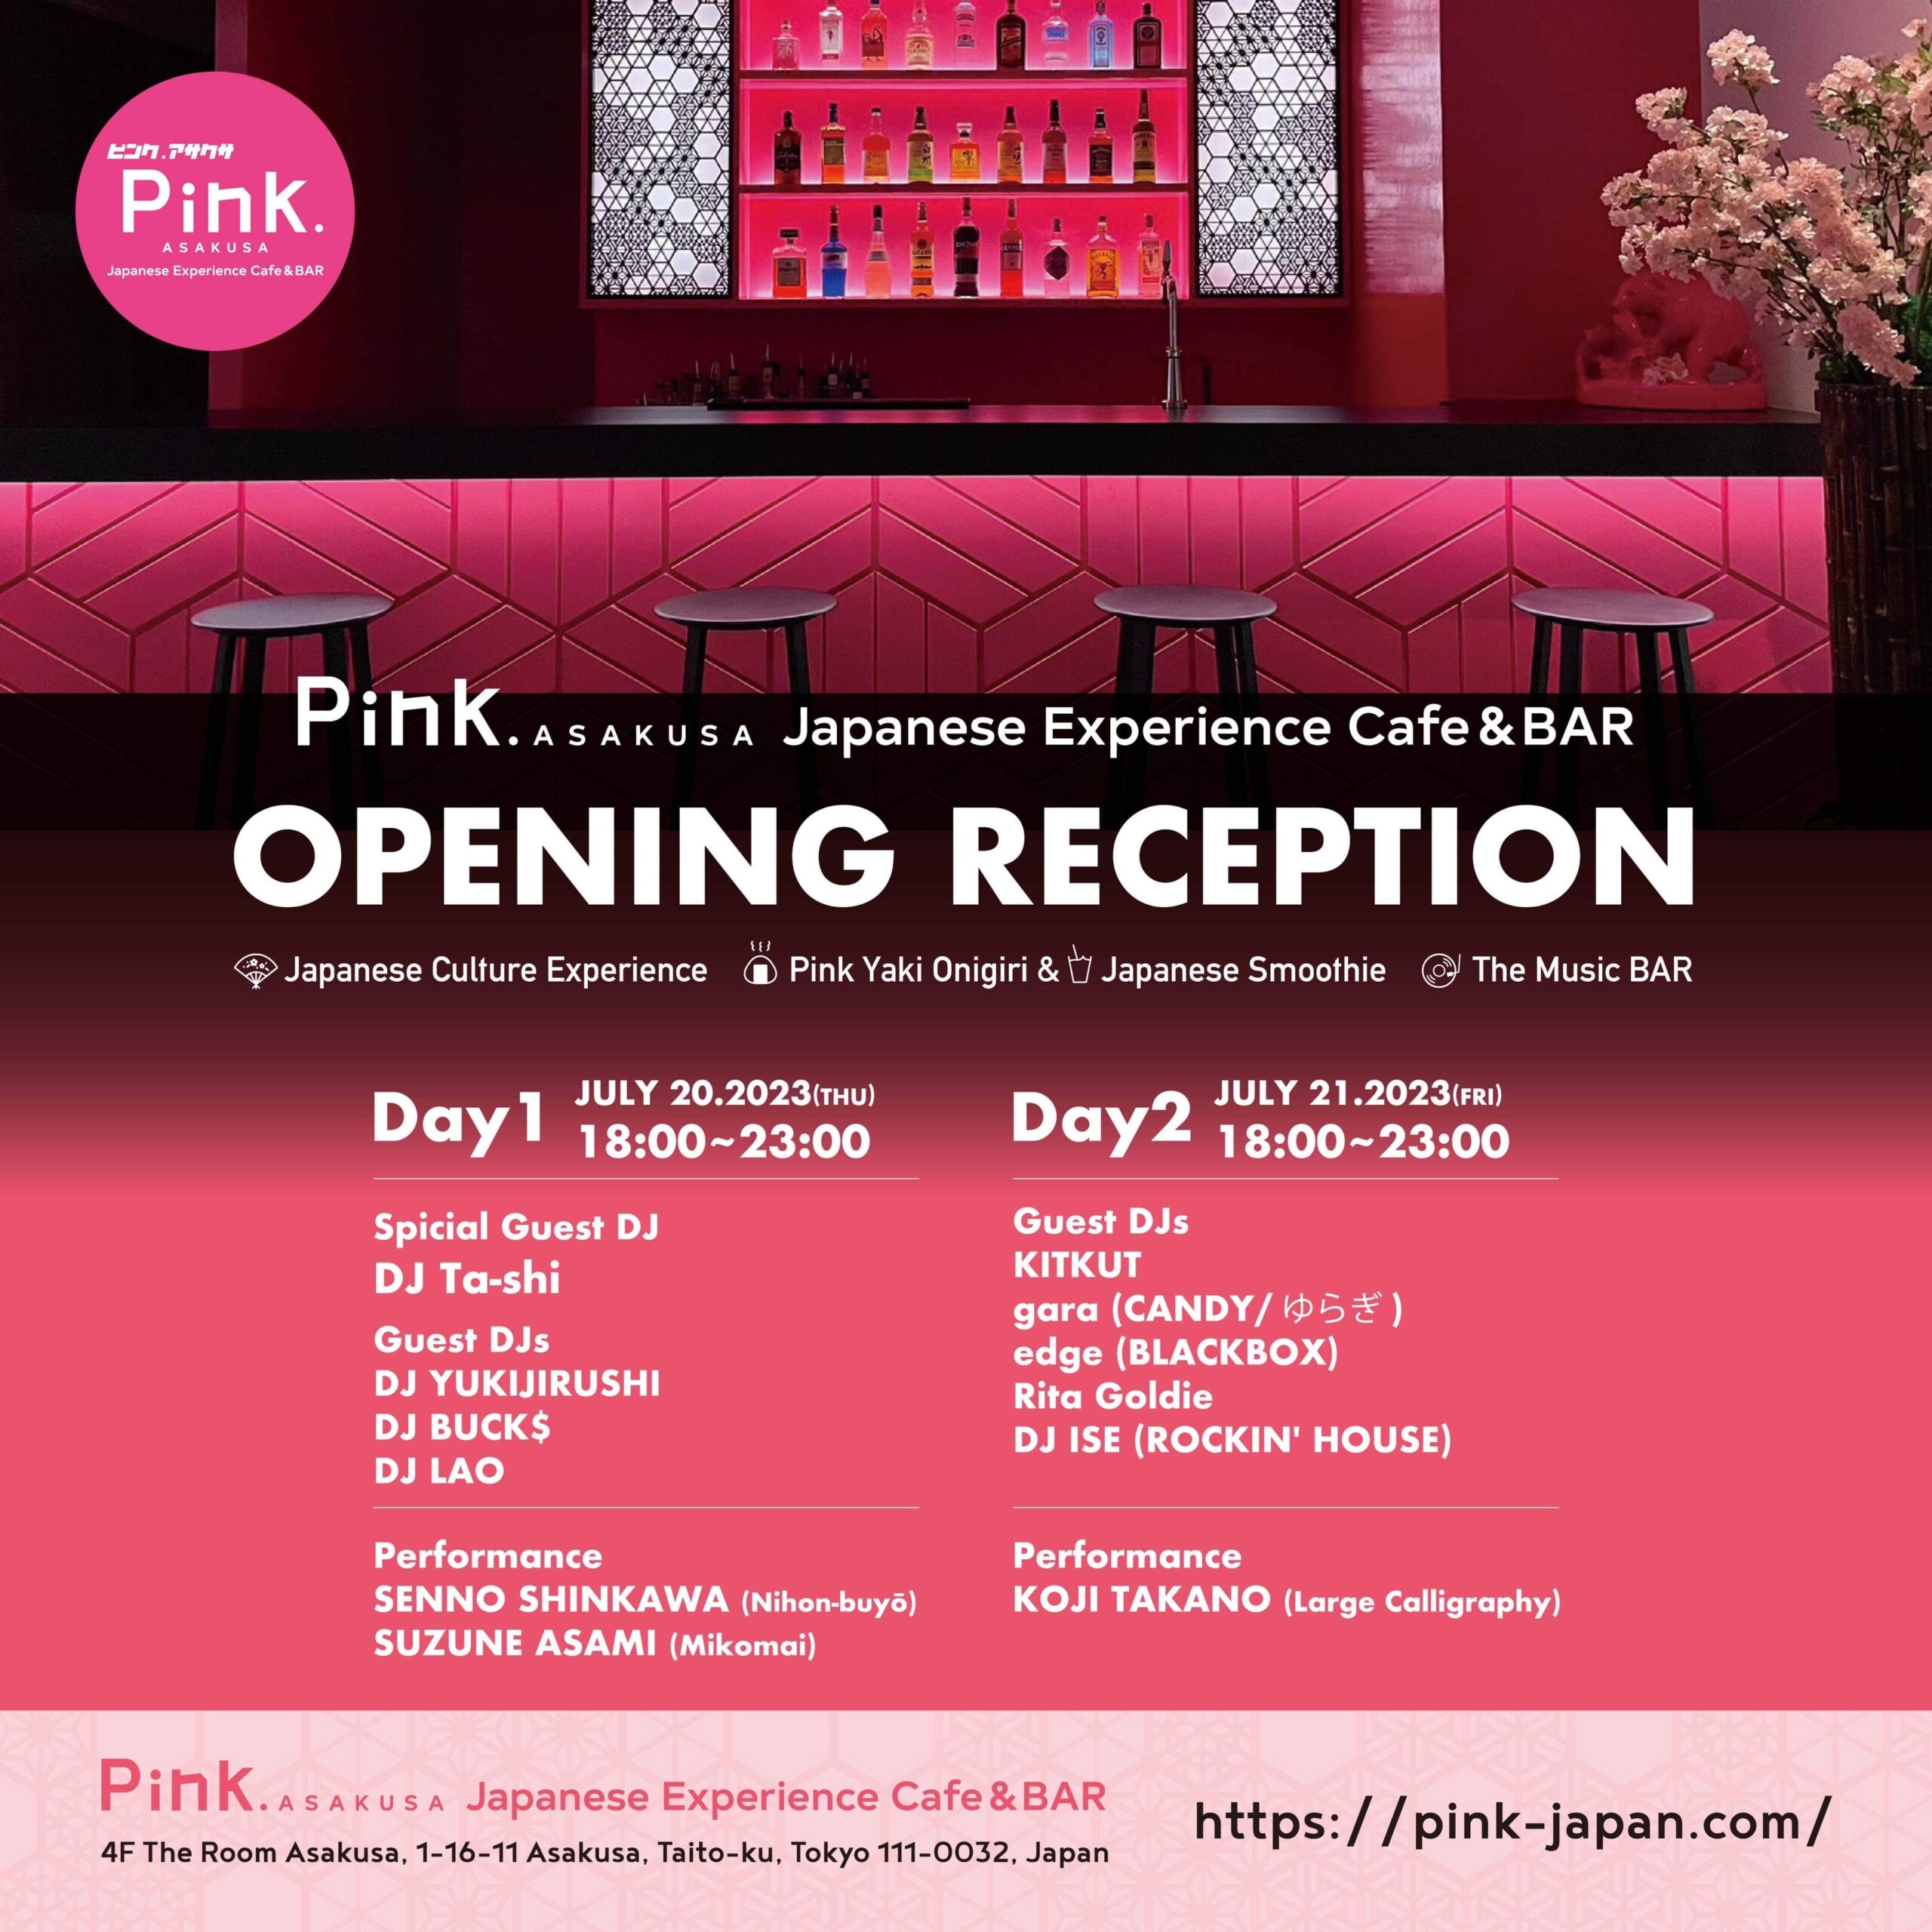 2023/7/21(fri)  Pink. ASAKUSA Japanese Experience Cafe & BAR Opening Reception